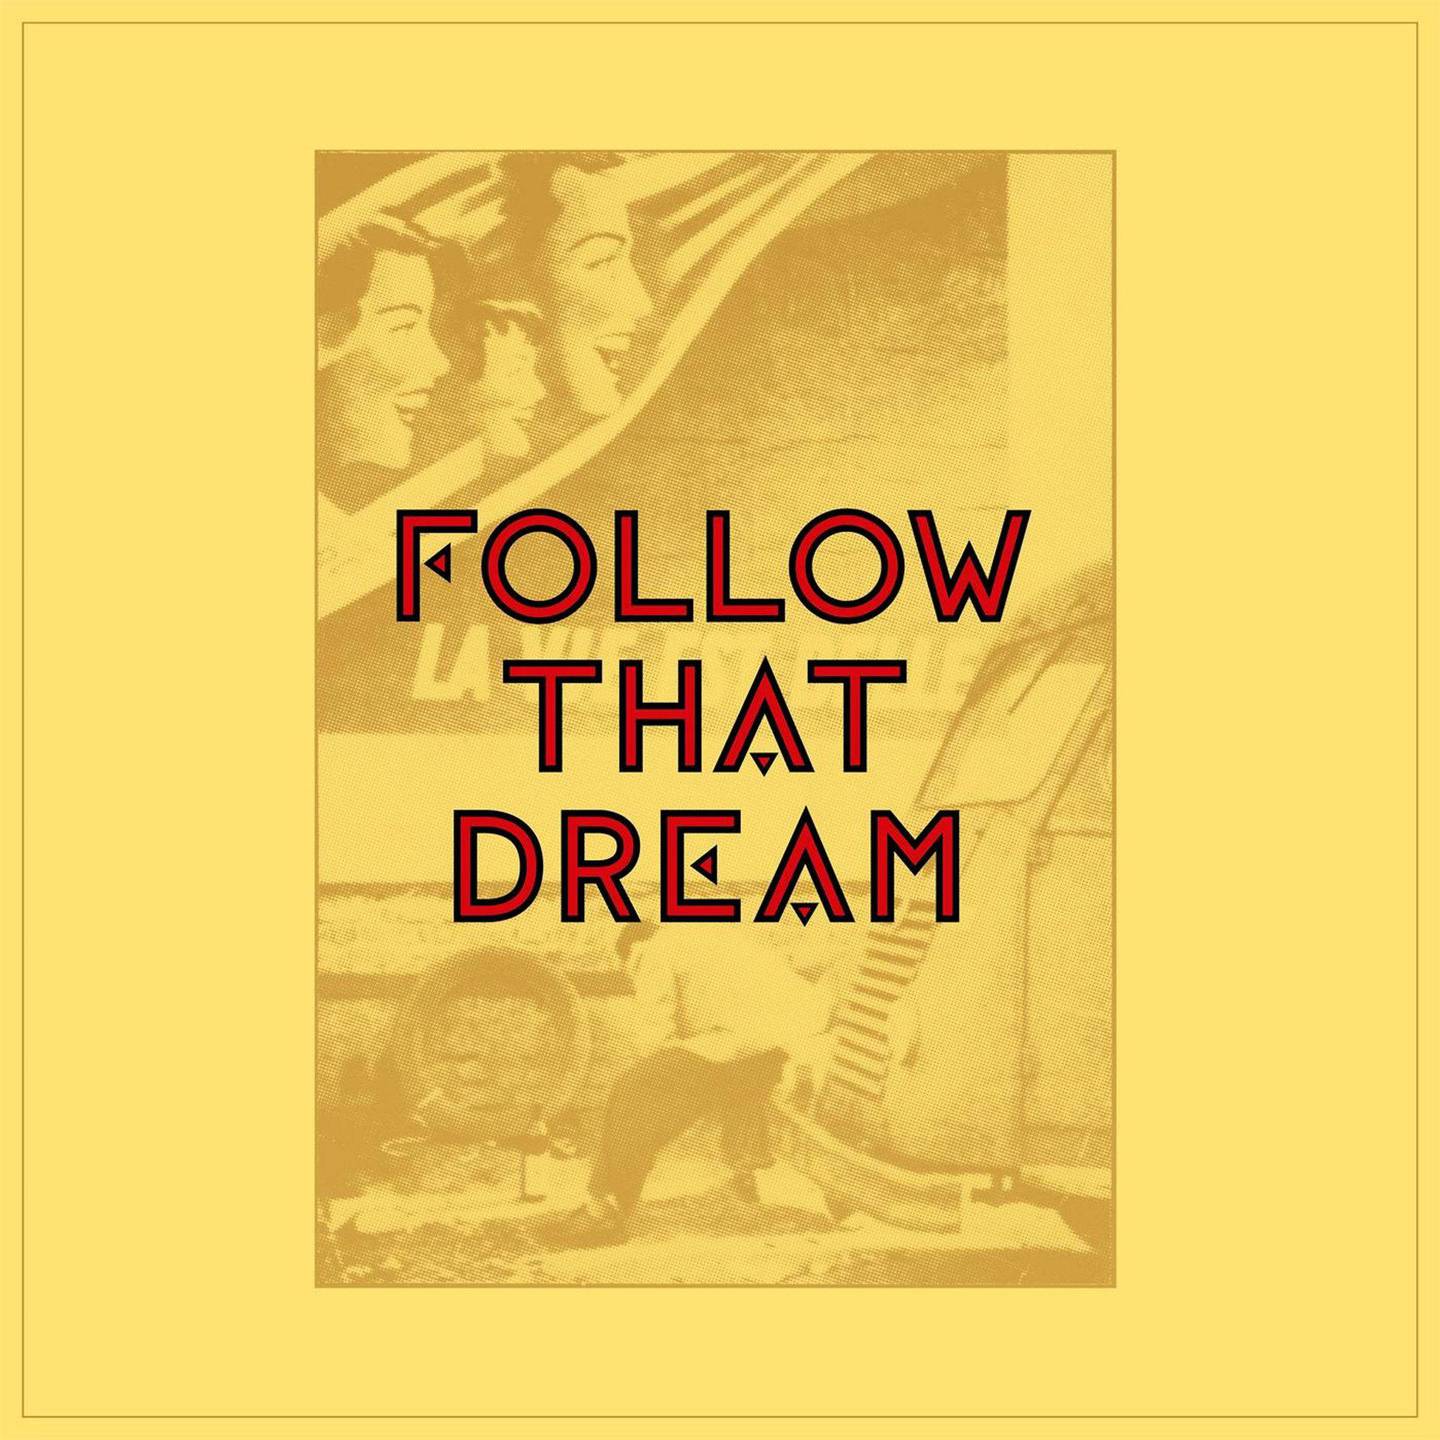 Follow that dream,KUL Anm Musikk B:«Follow That Dream»
KUL Anm Musikk C:Drabant